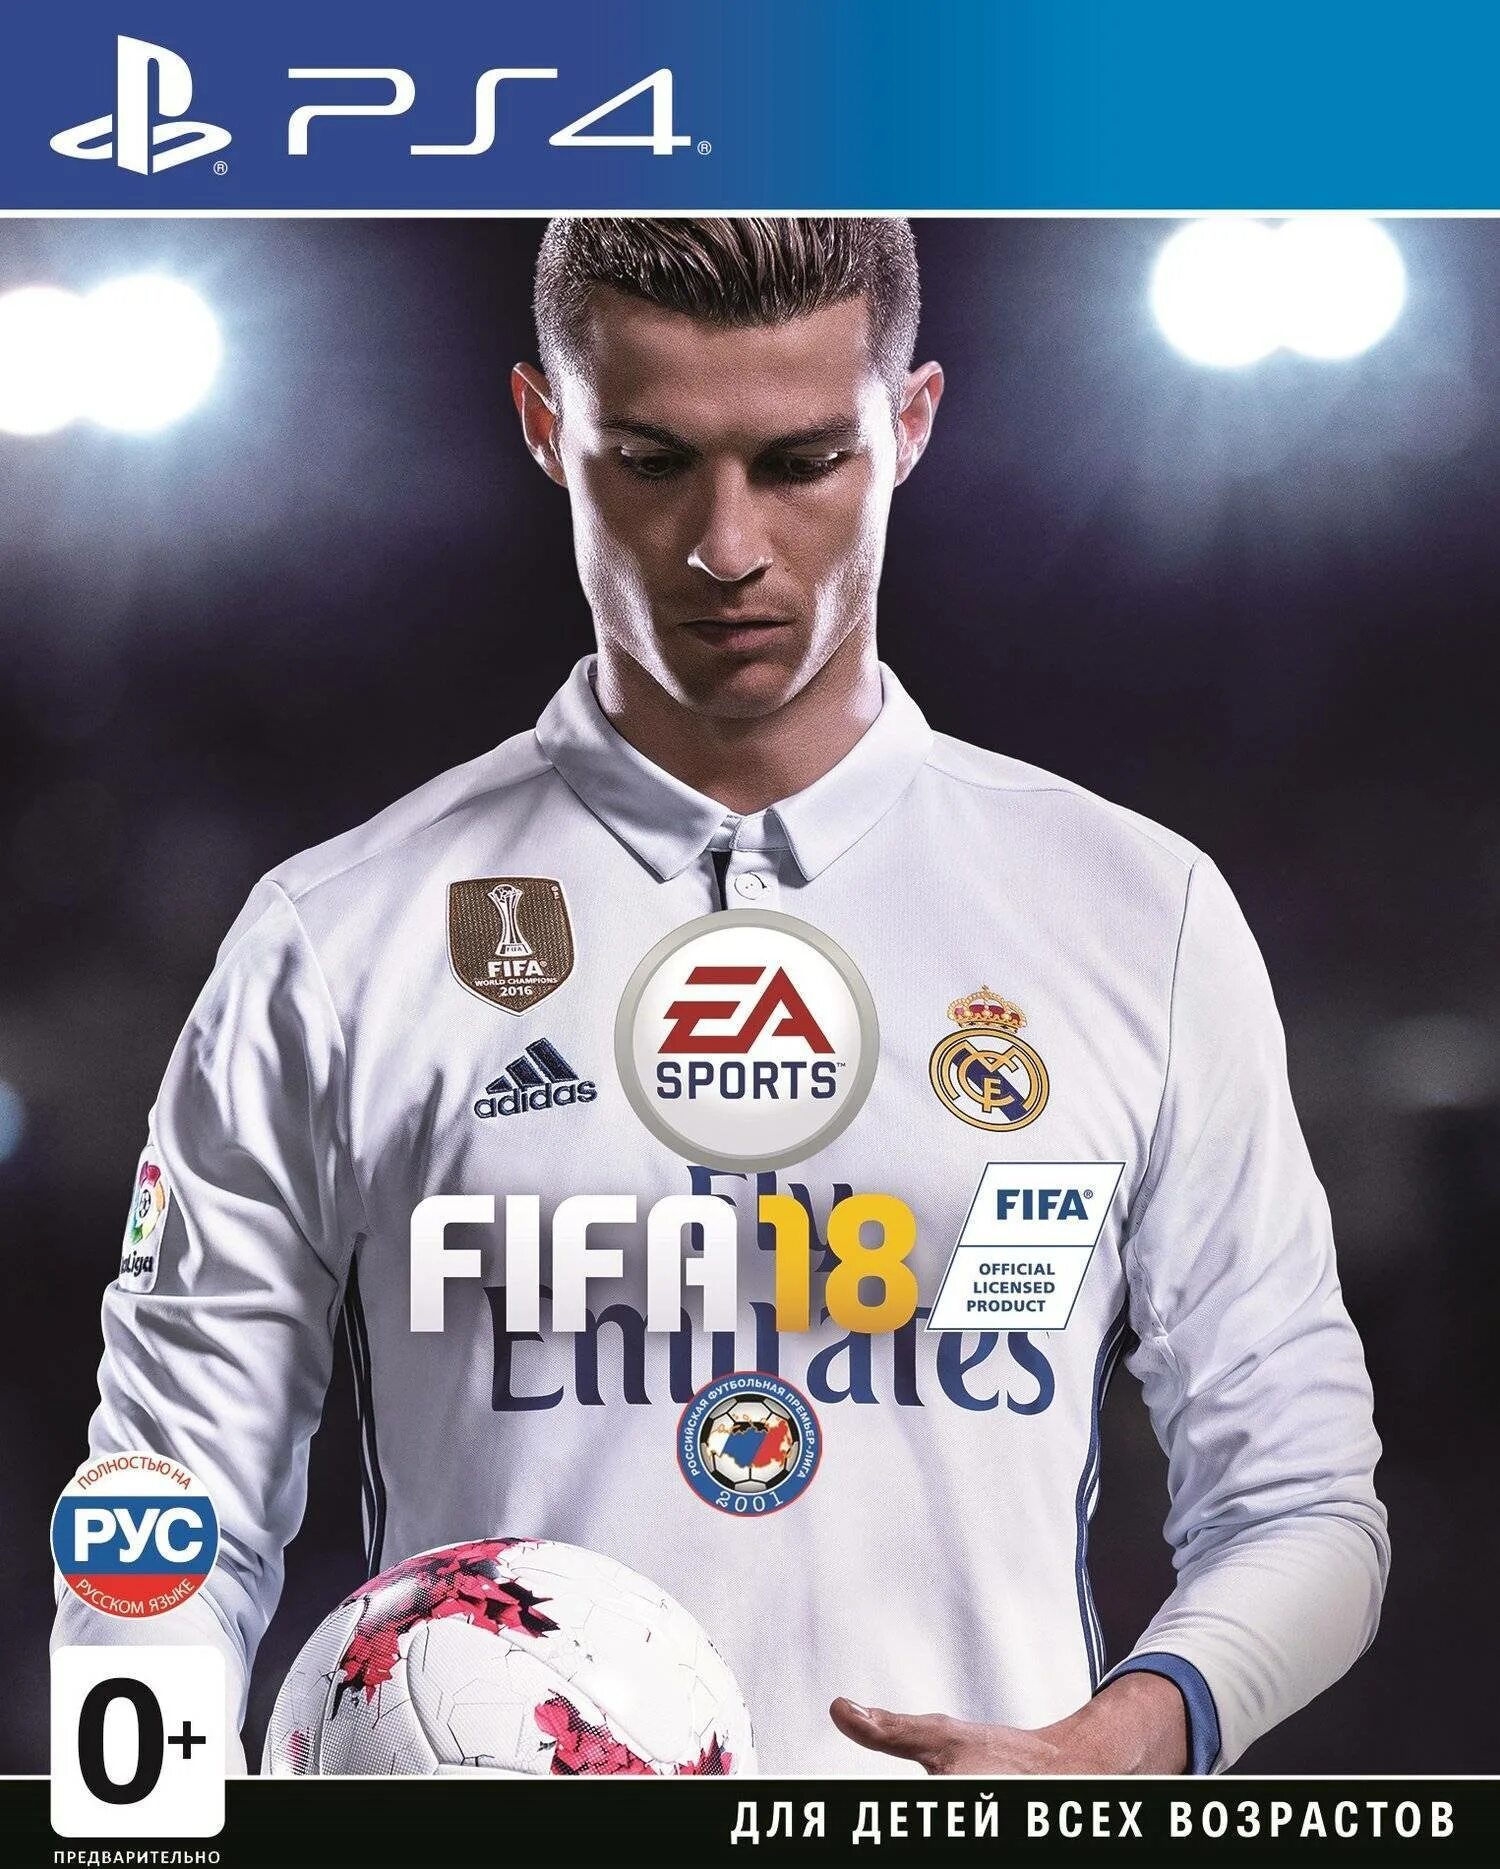 Fifa цена. FIFA 18 [ps4]. Диск ФИФА 18 на ПС 3. FIFA 18 ps4 диск. FIFA 18 ps4 диск русская версия.